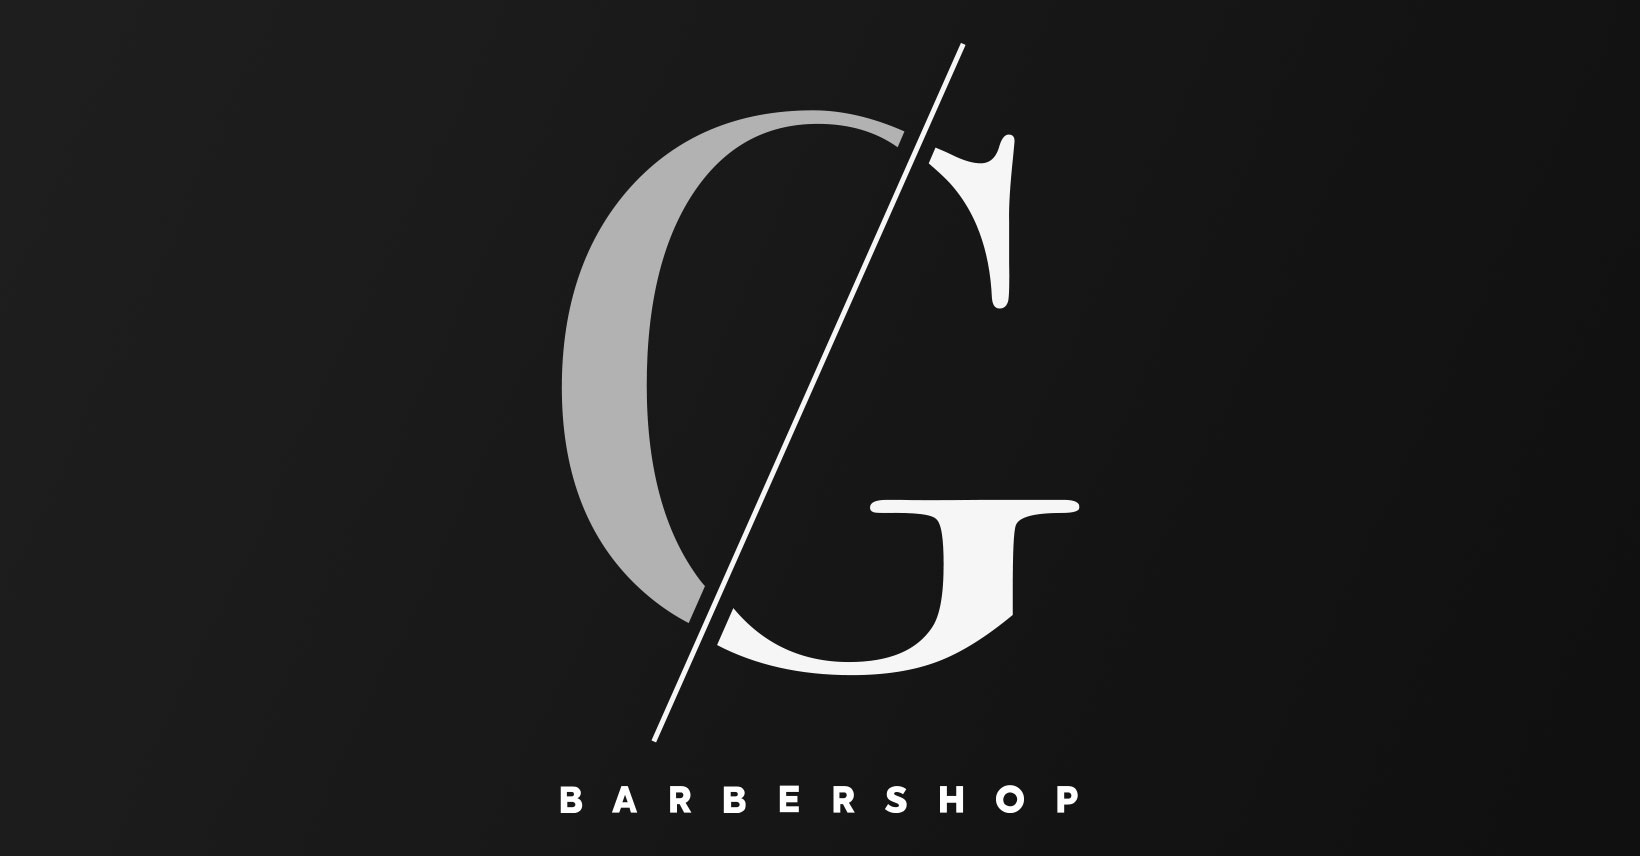 CG Barber Shop Logo